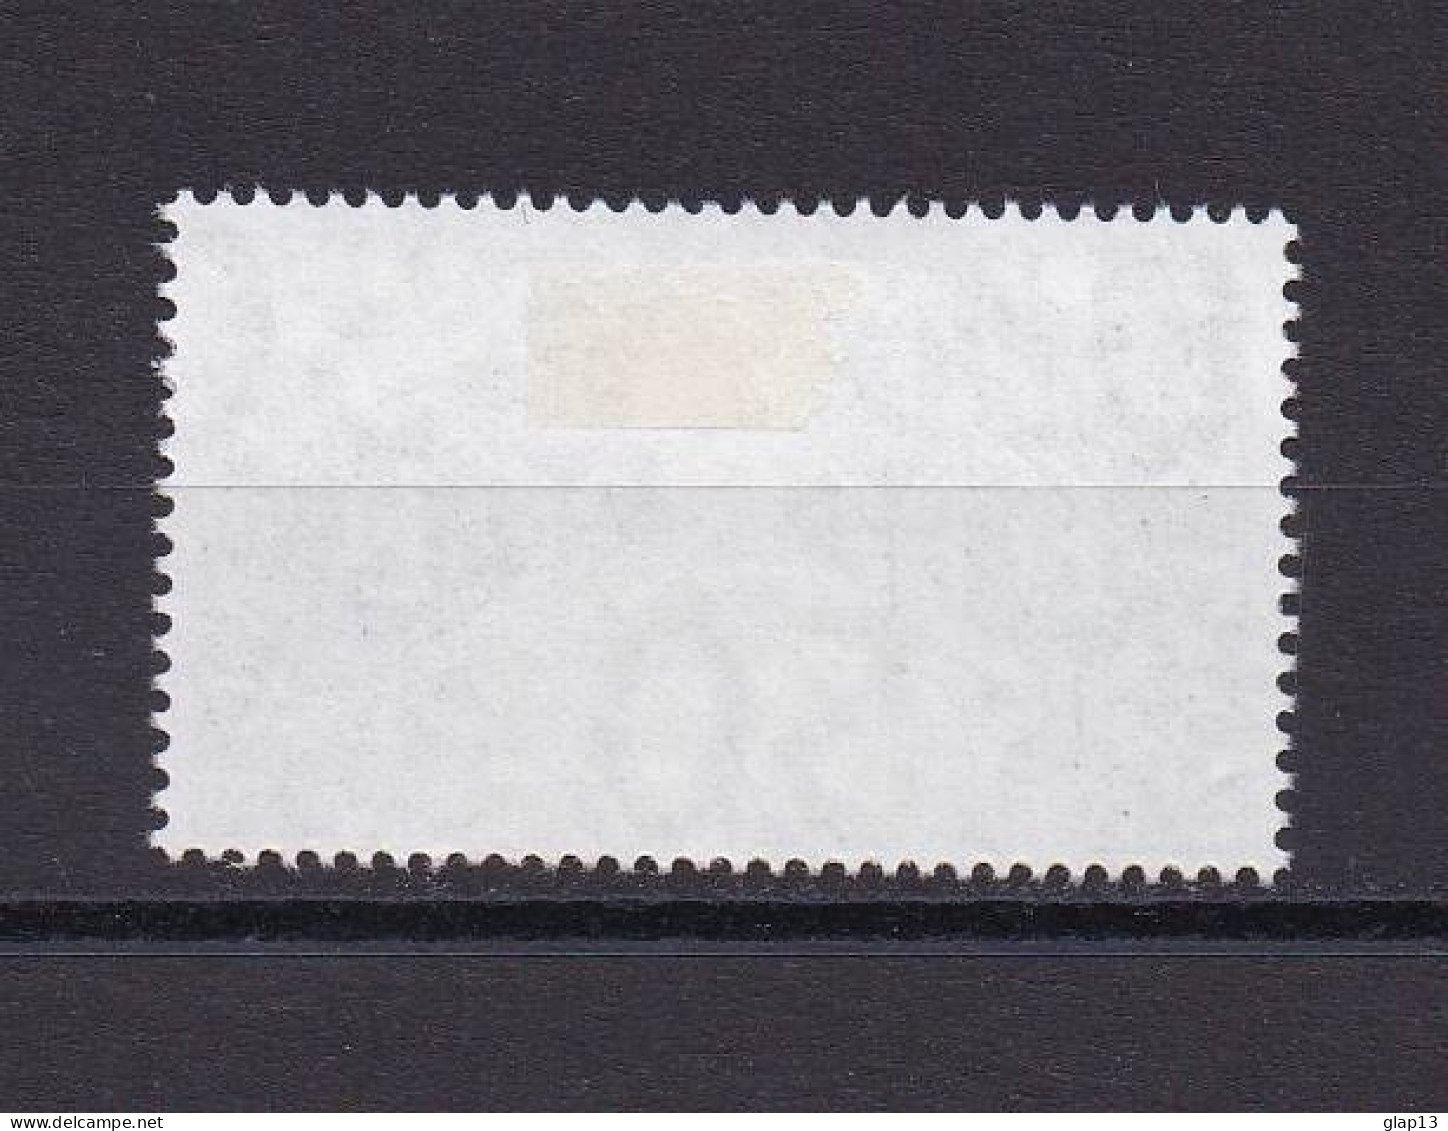 GRANDE-BRETAGNE 2003 TIMBRE N°2181a OBLITERE ELIZABETH II - Used Stamps